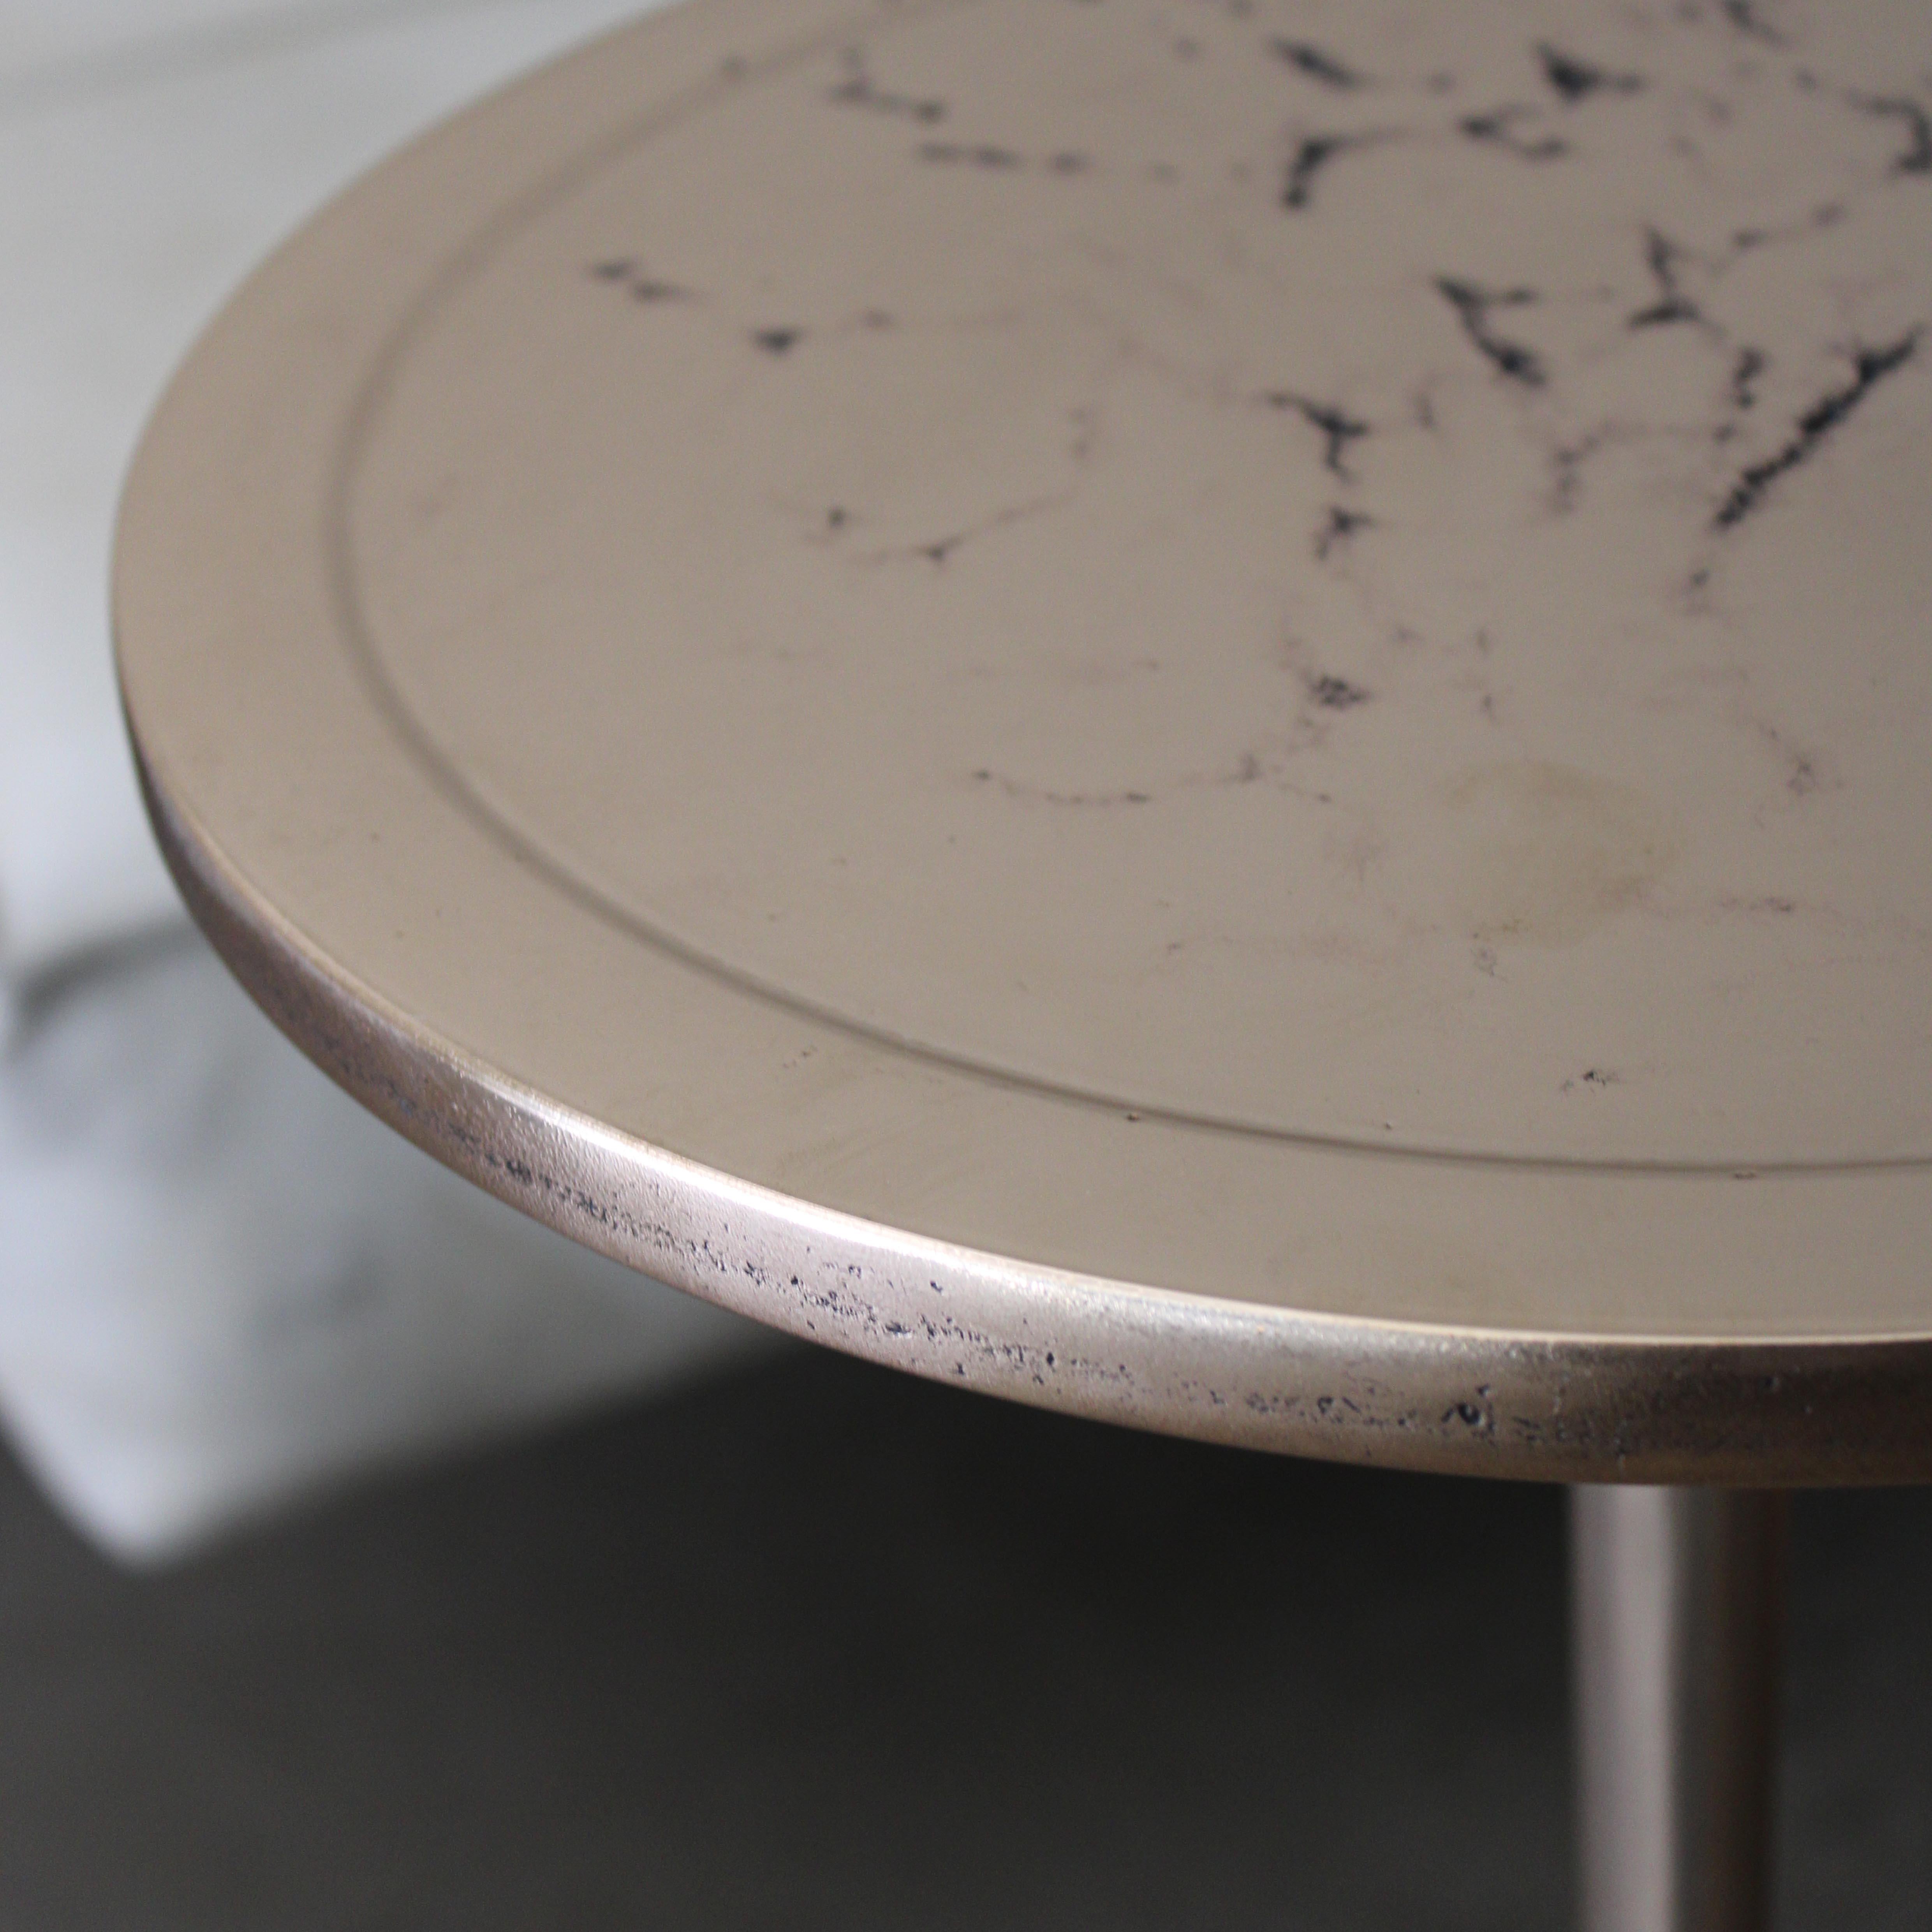 Cast Bronze Colla-Sprue Side Table by Studio Sunt For Sale 6